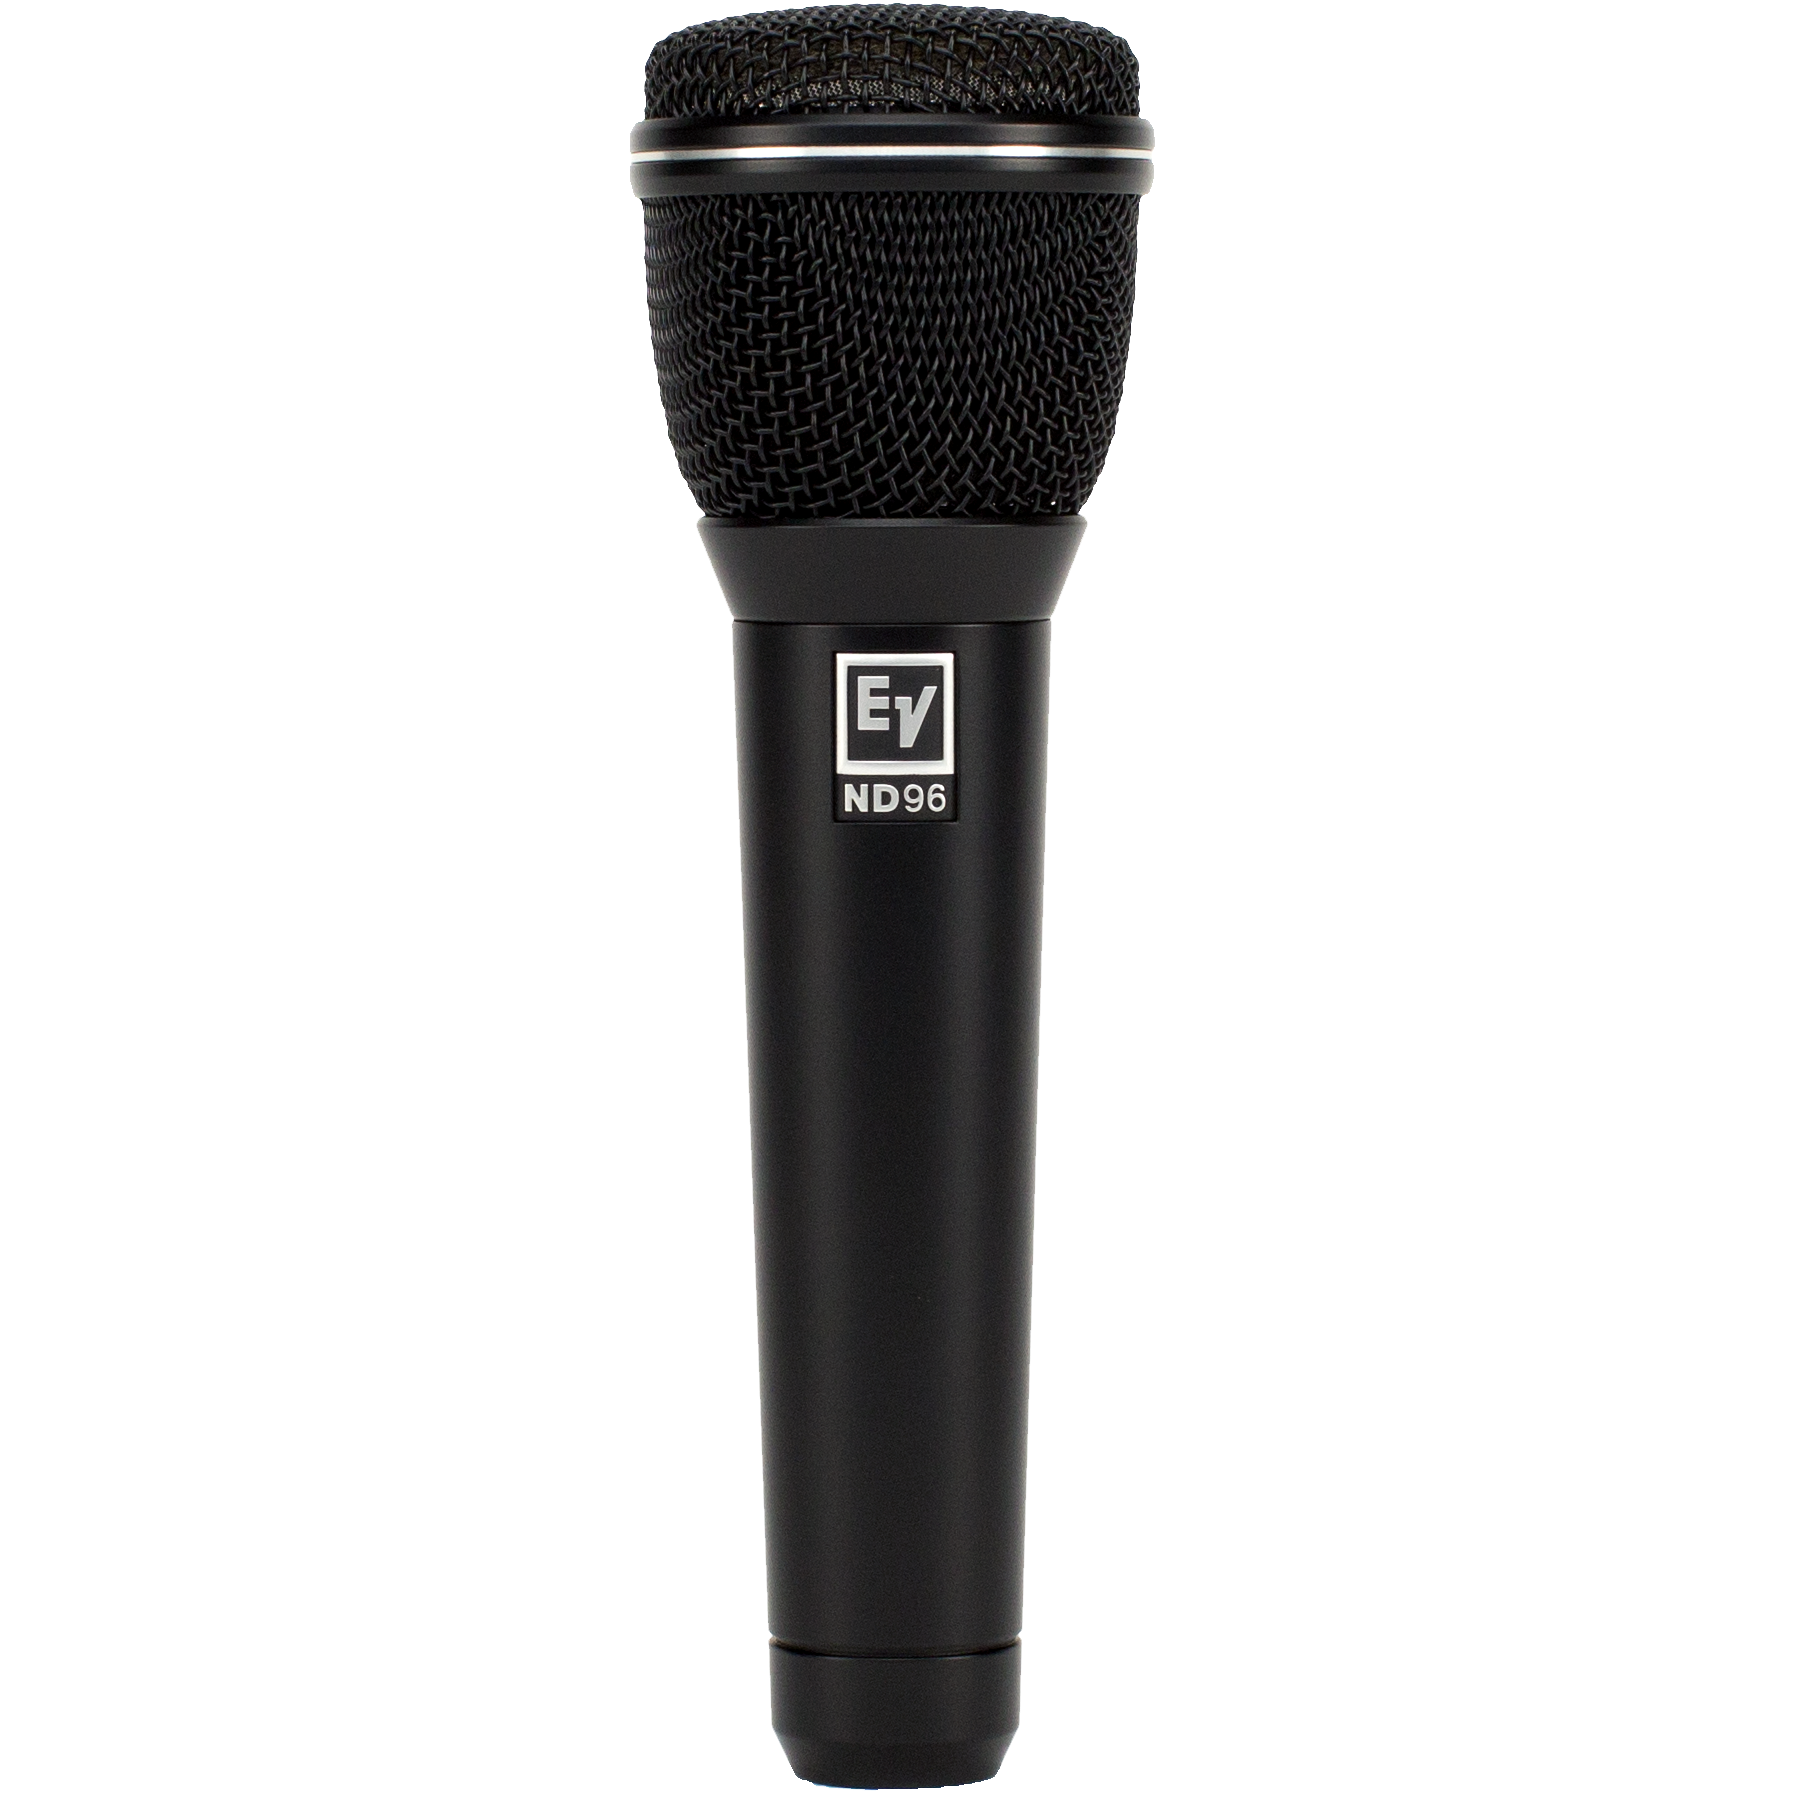 ND 96 Dynamisches Mikrofon